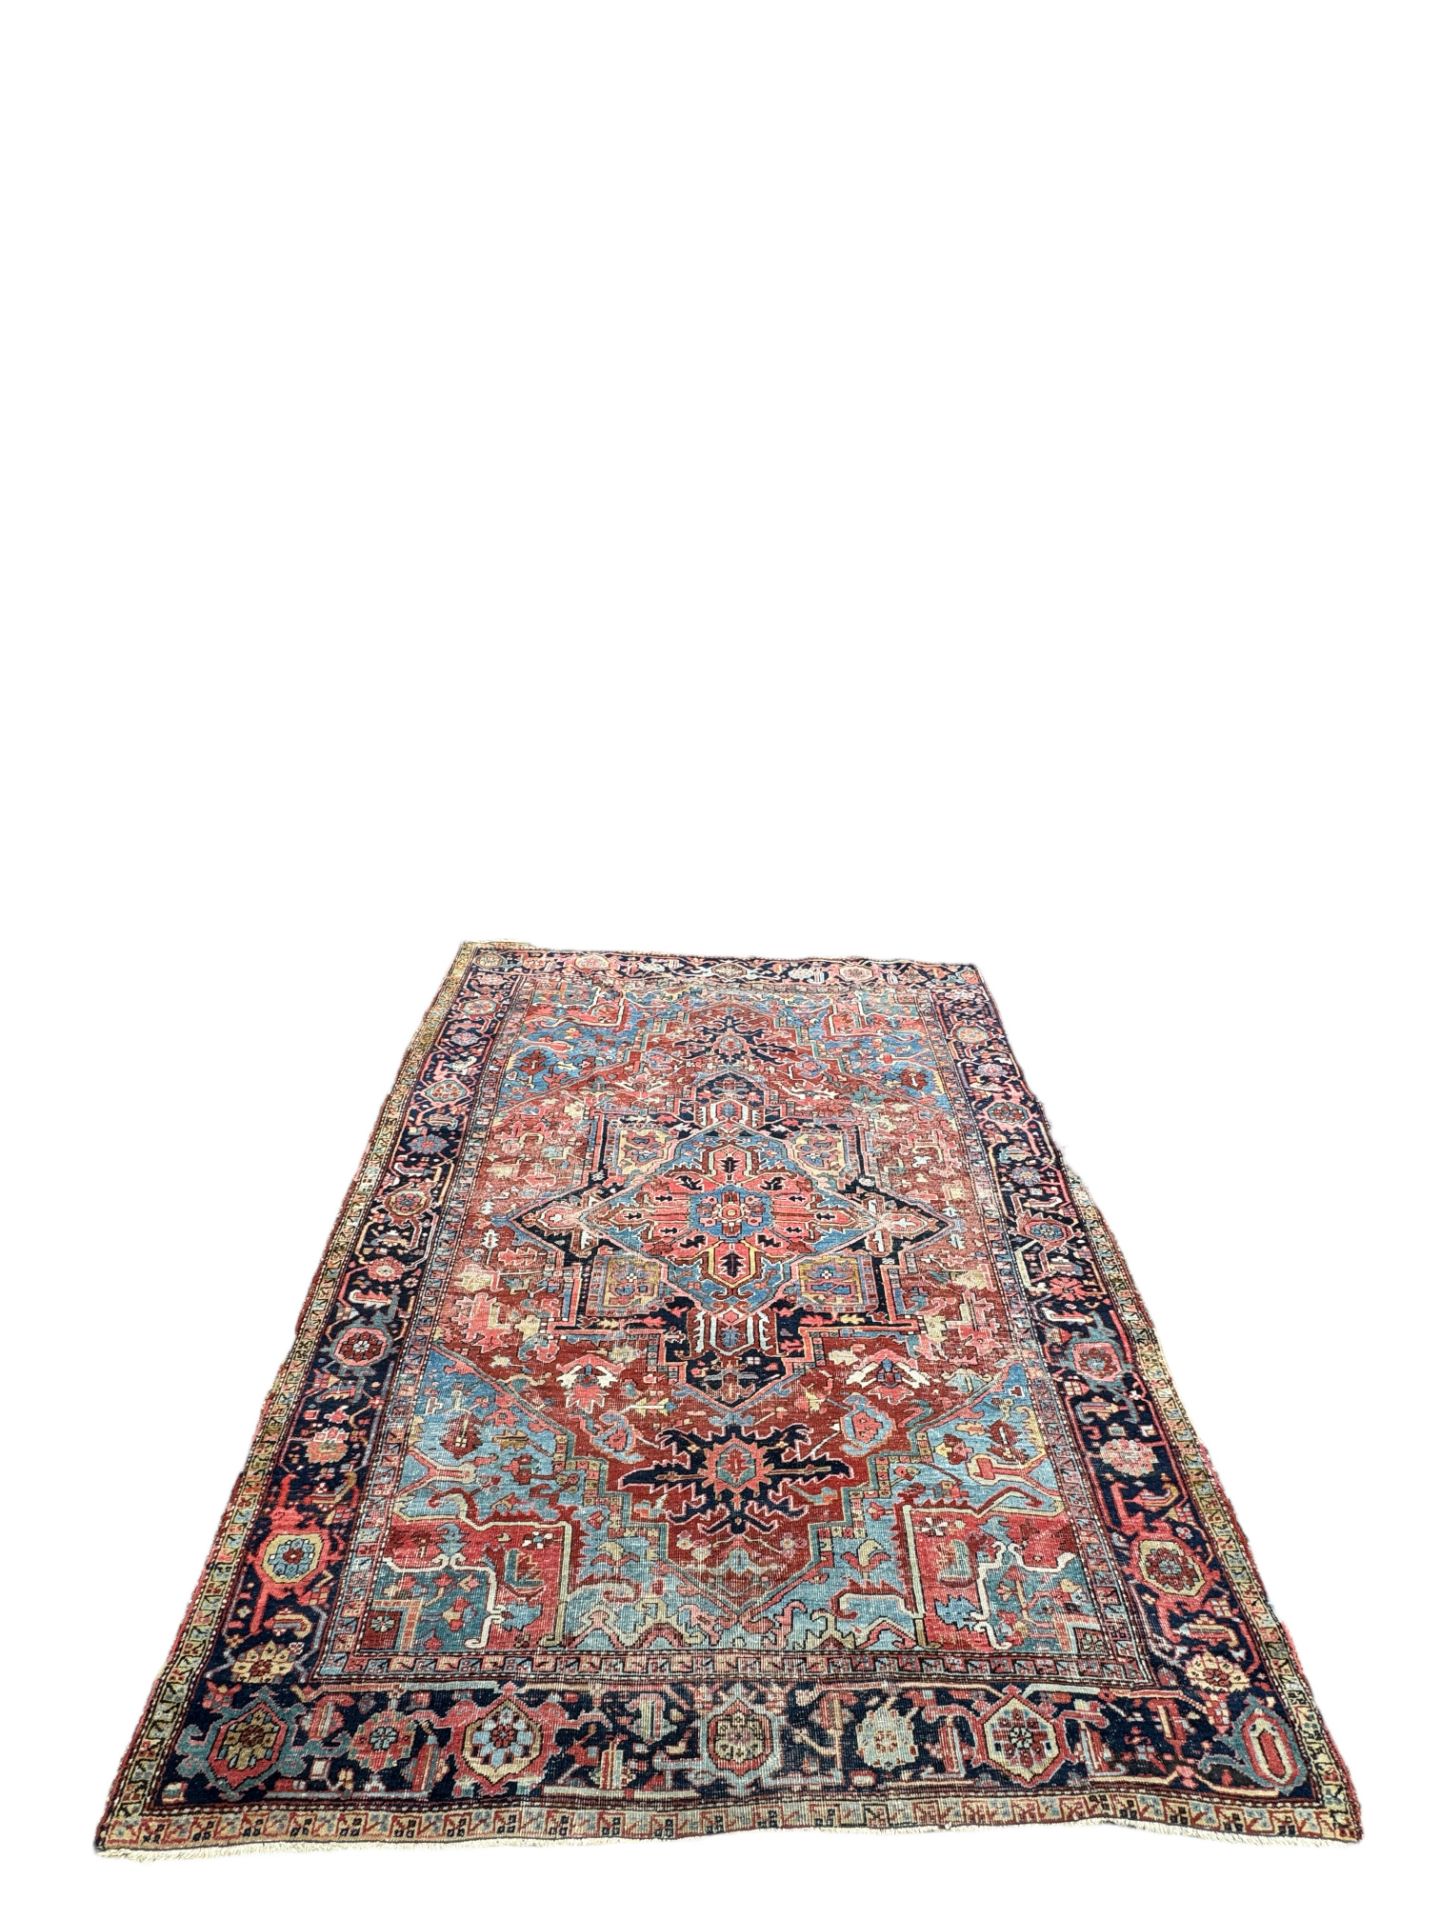 A Heriz carpet, North West Persia, circa 1900 - Image 11 of 11